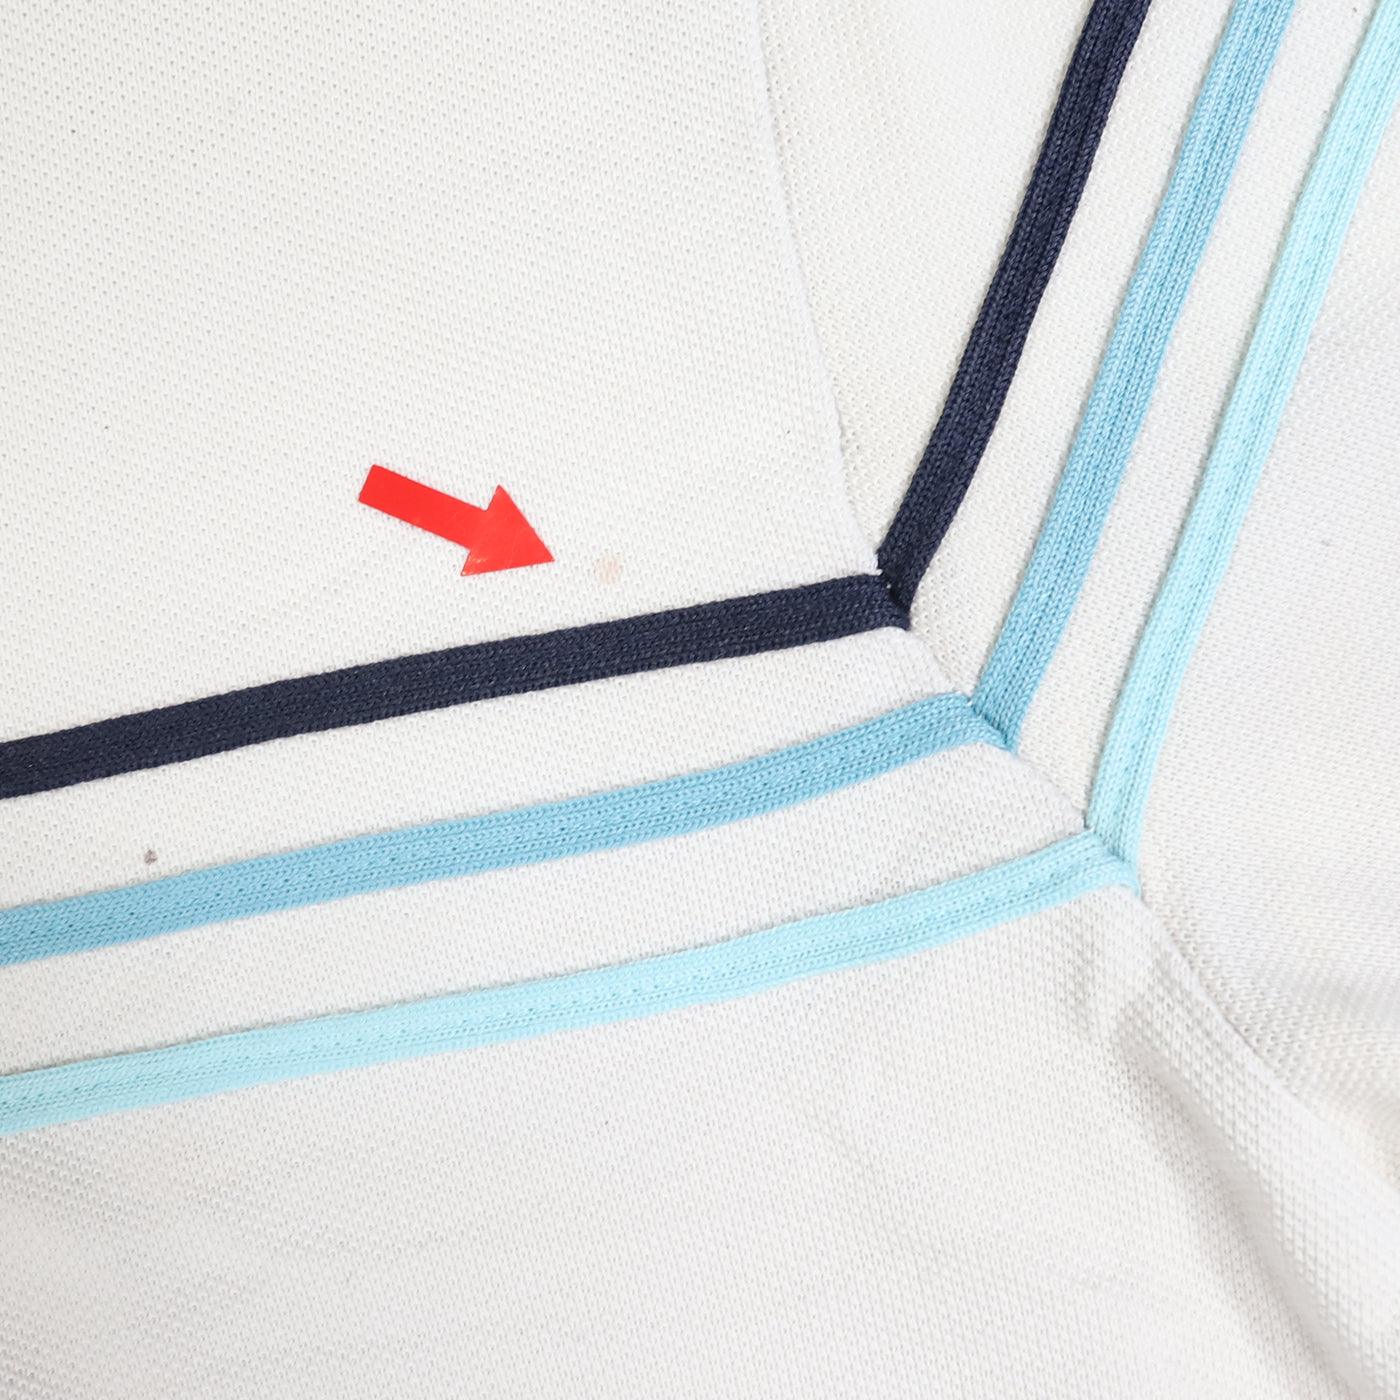 Yves Saint Laurent Vintage Polo Shirt - Medium - Known Source